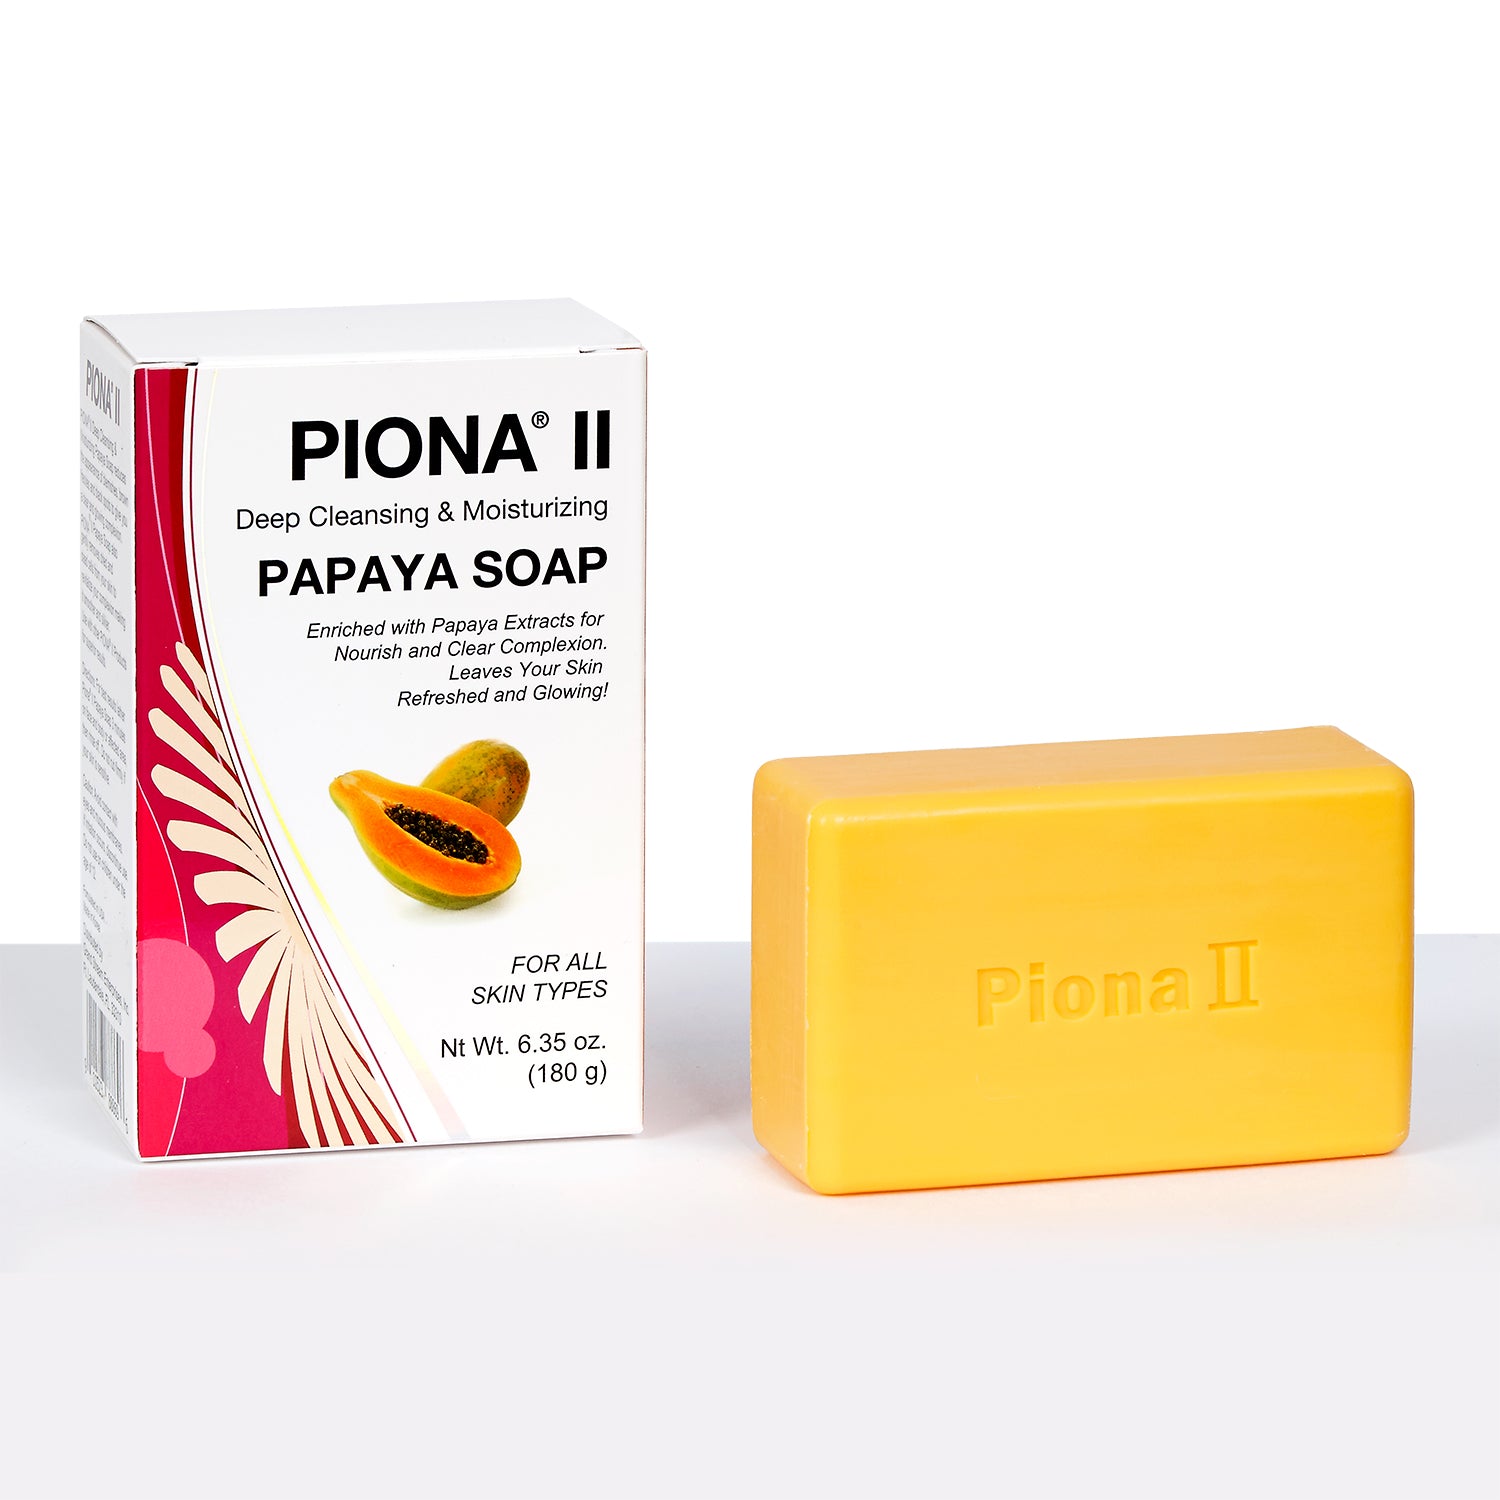 Piona II Deep Cleansing & Moisturizing Papaya Soap 6.35